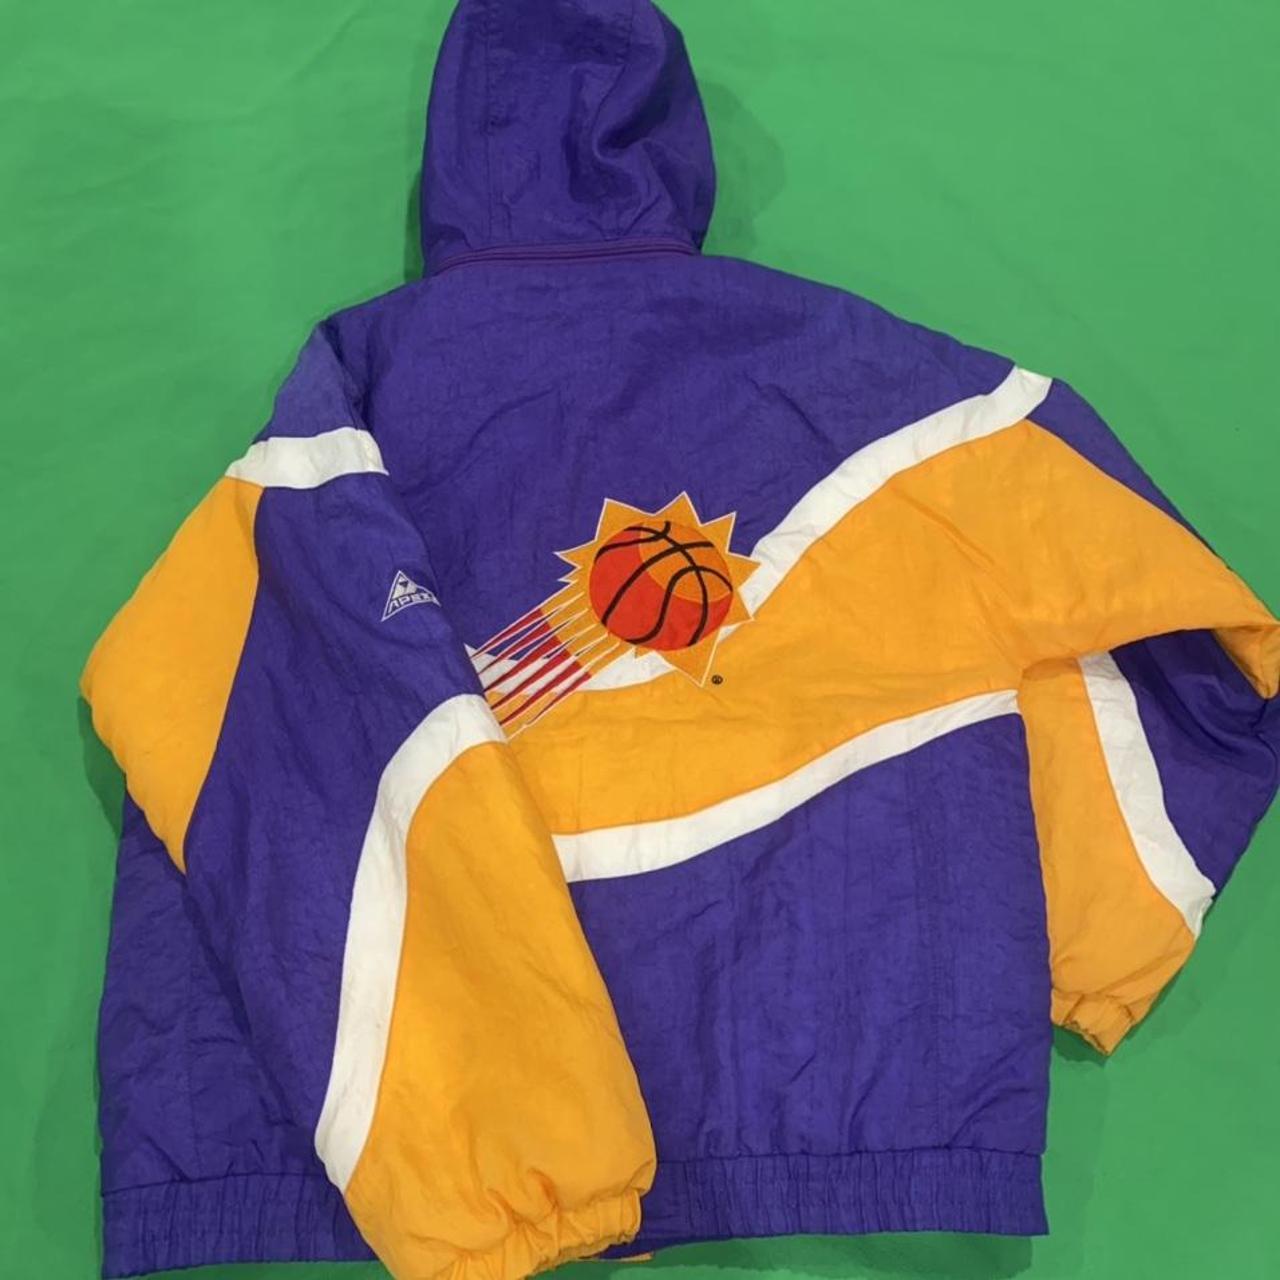 Vintage 90s phoenix suns starter zip up jacket - Depop